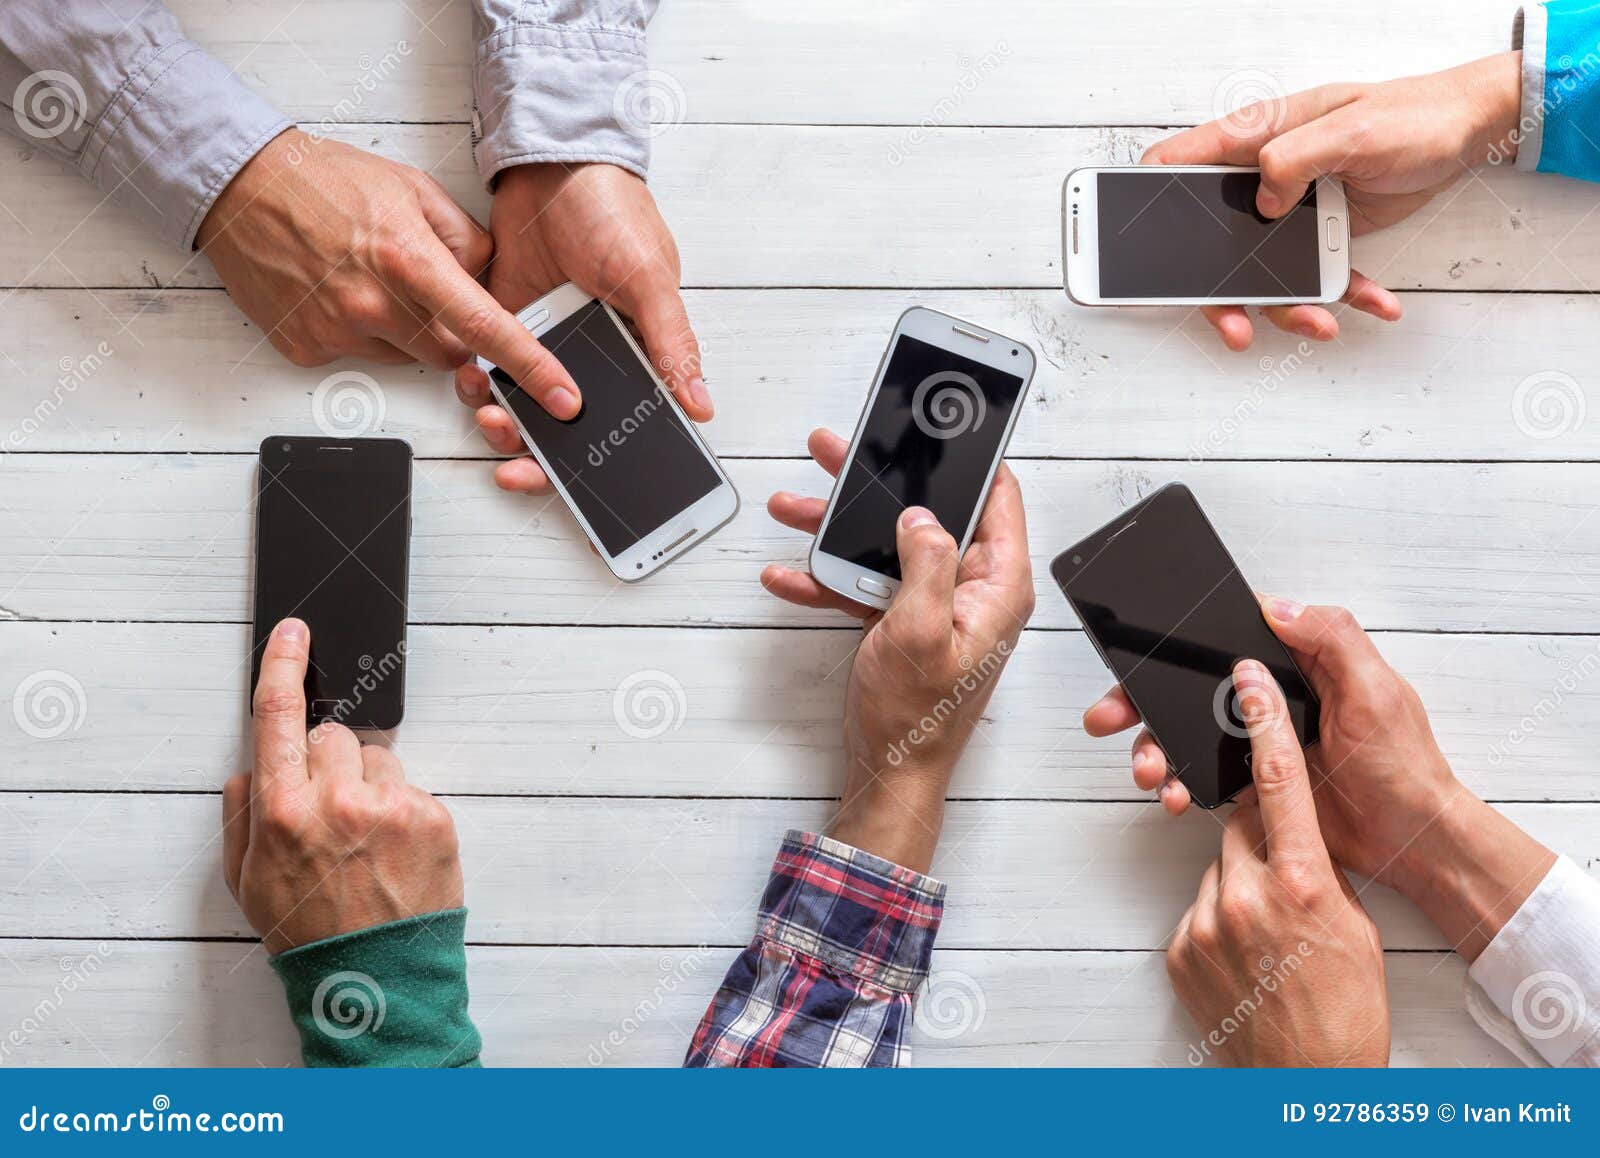 mobile phones in friends hand